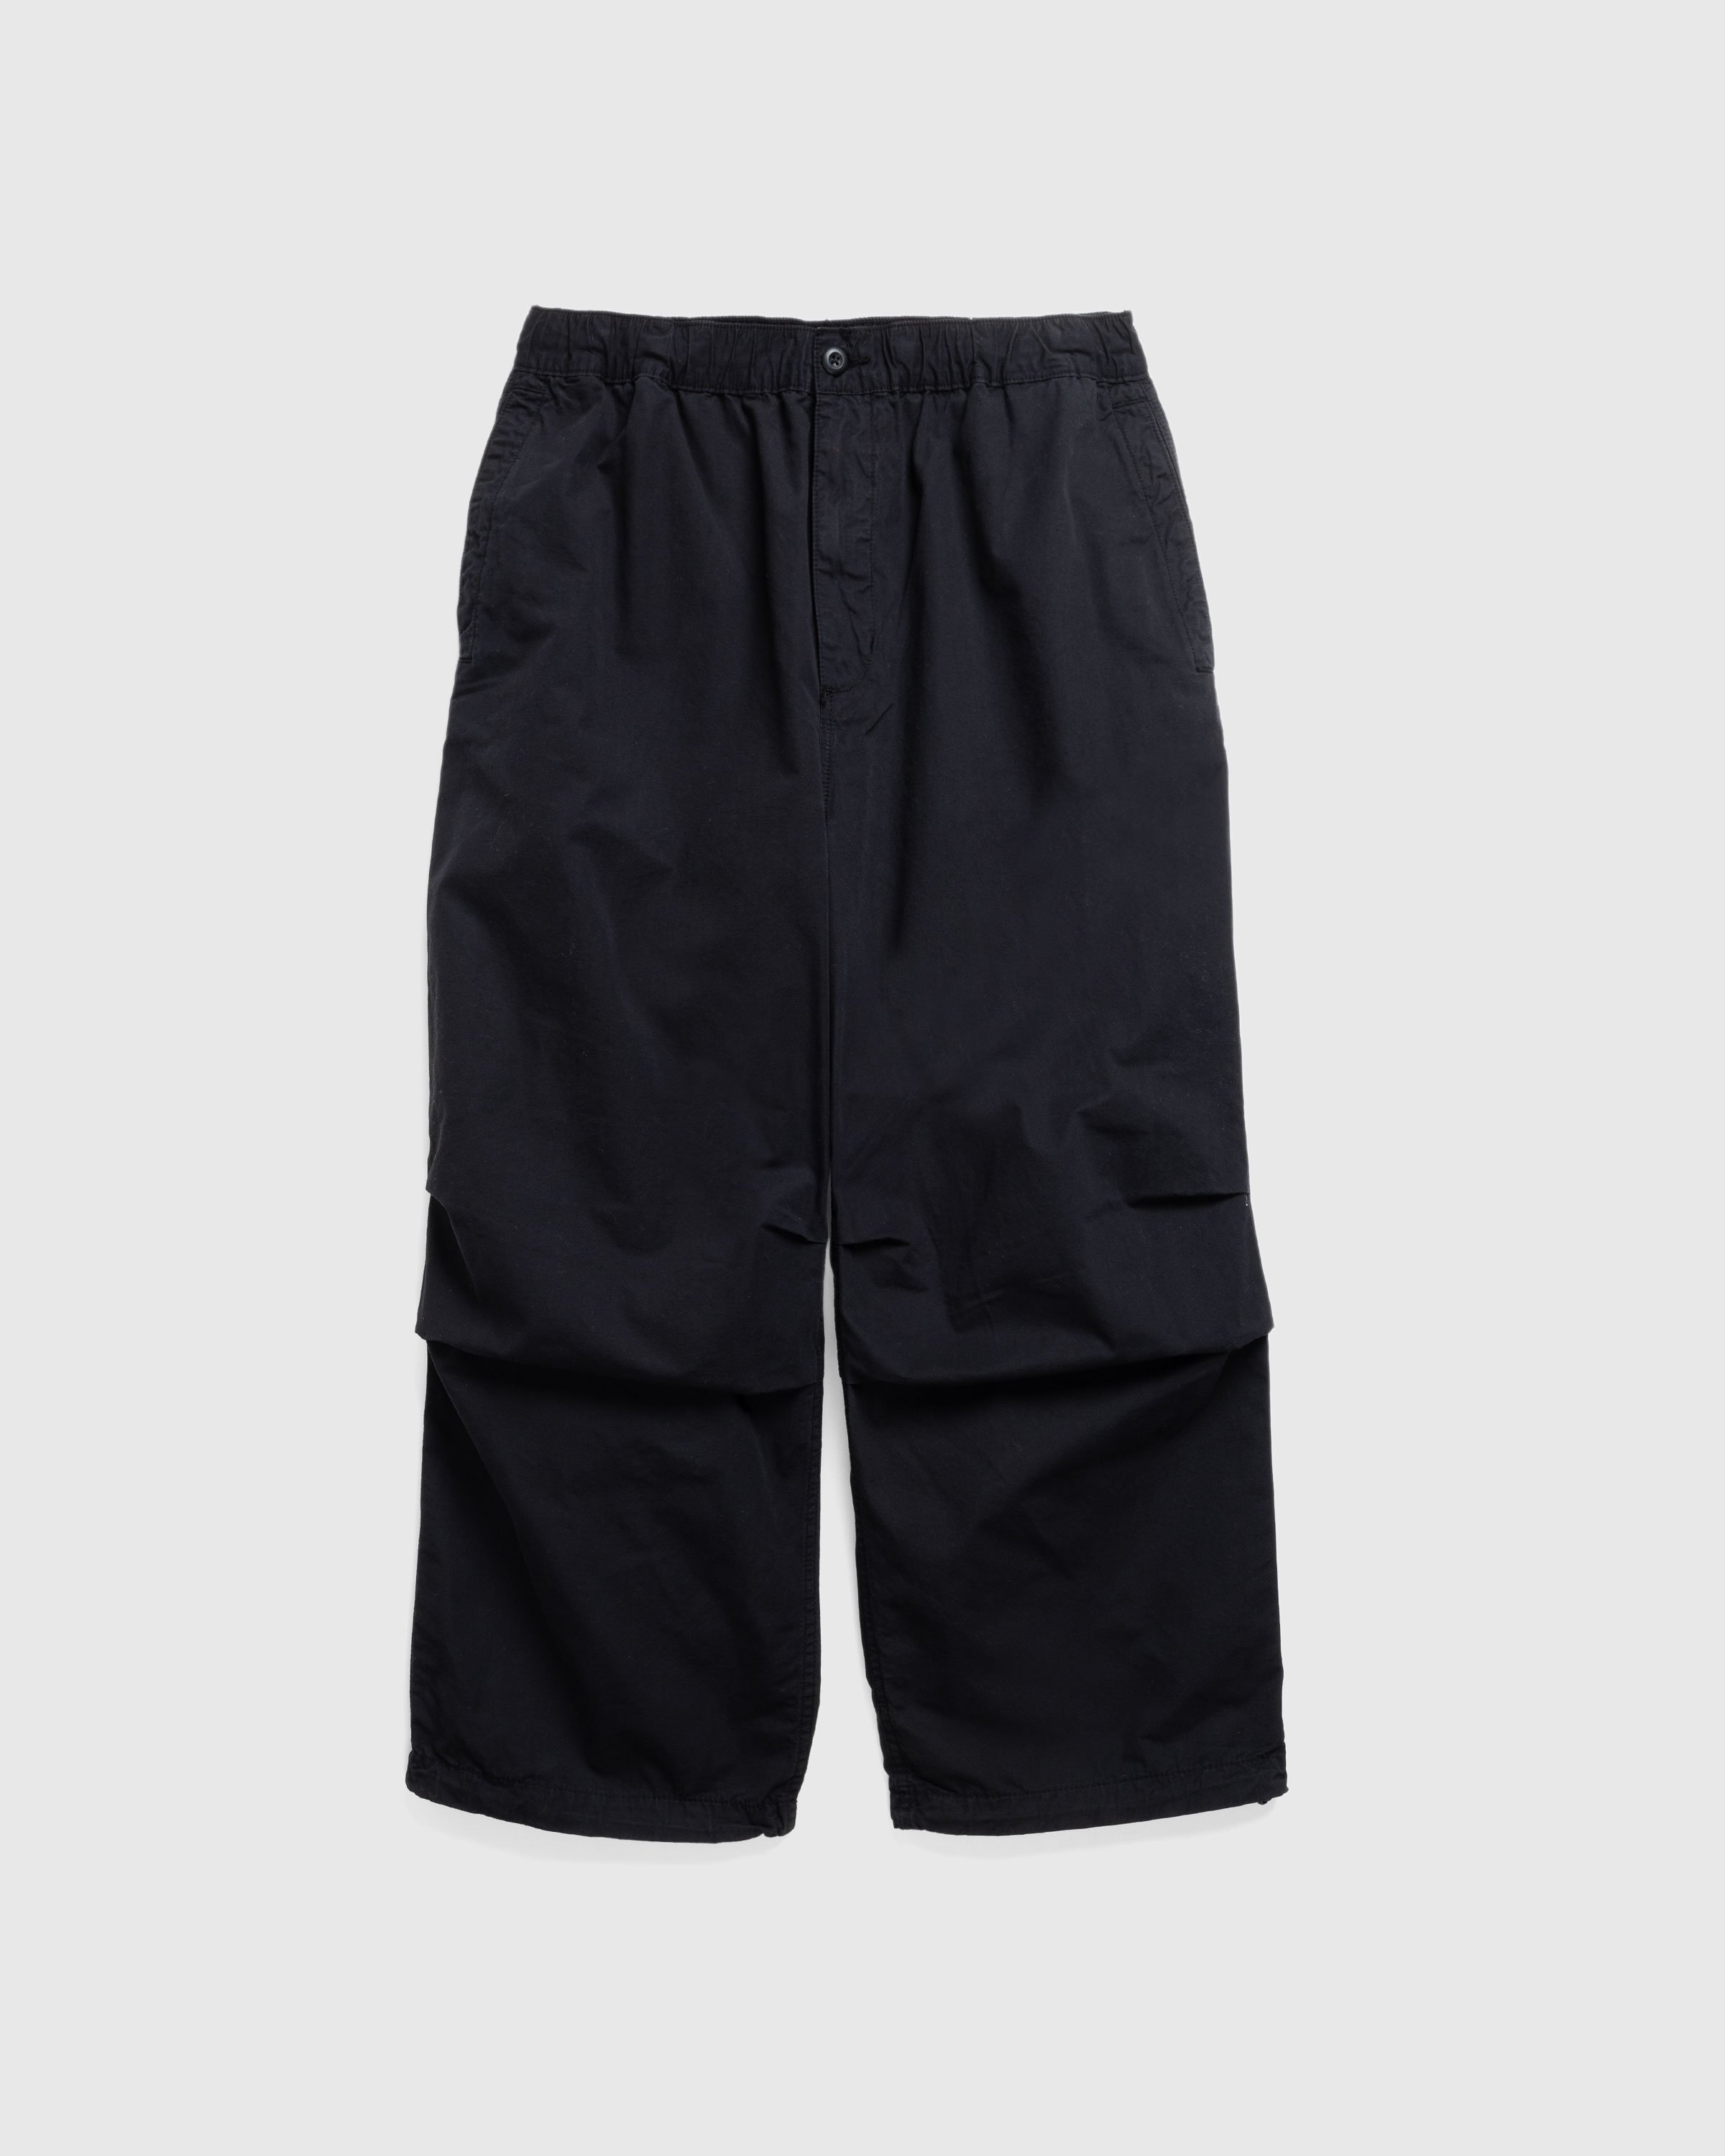 Carhartt WIP - Judd Pant Black /garment dyed - Clothing - Black - Image 1